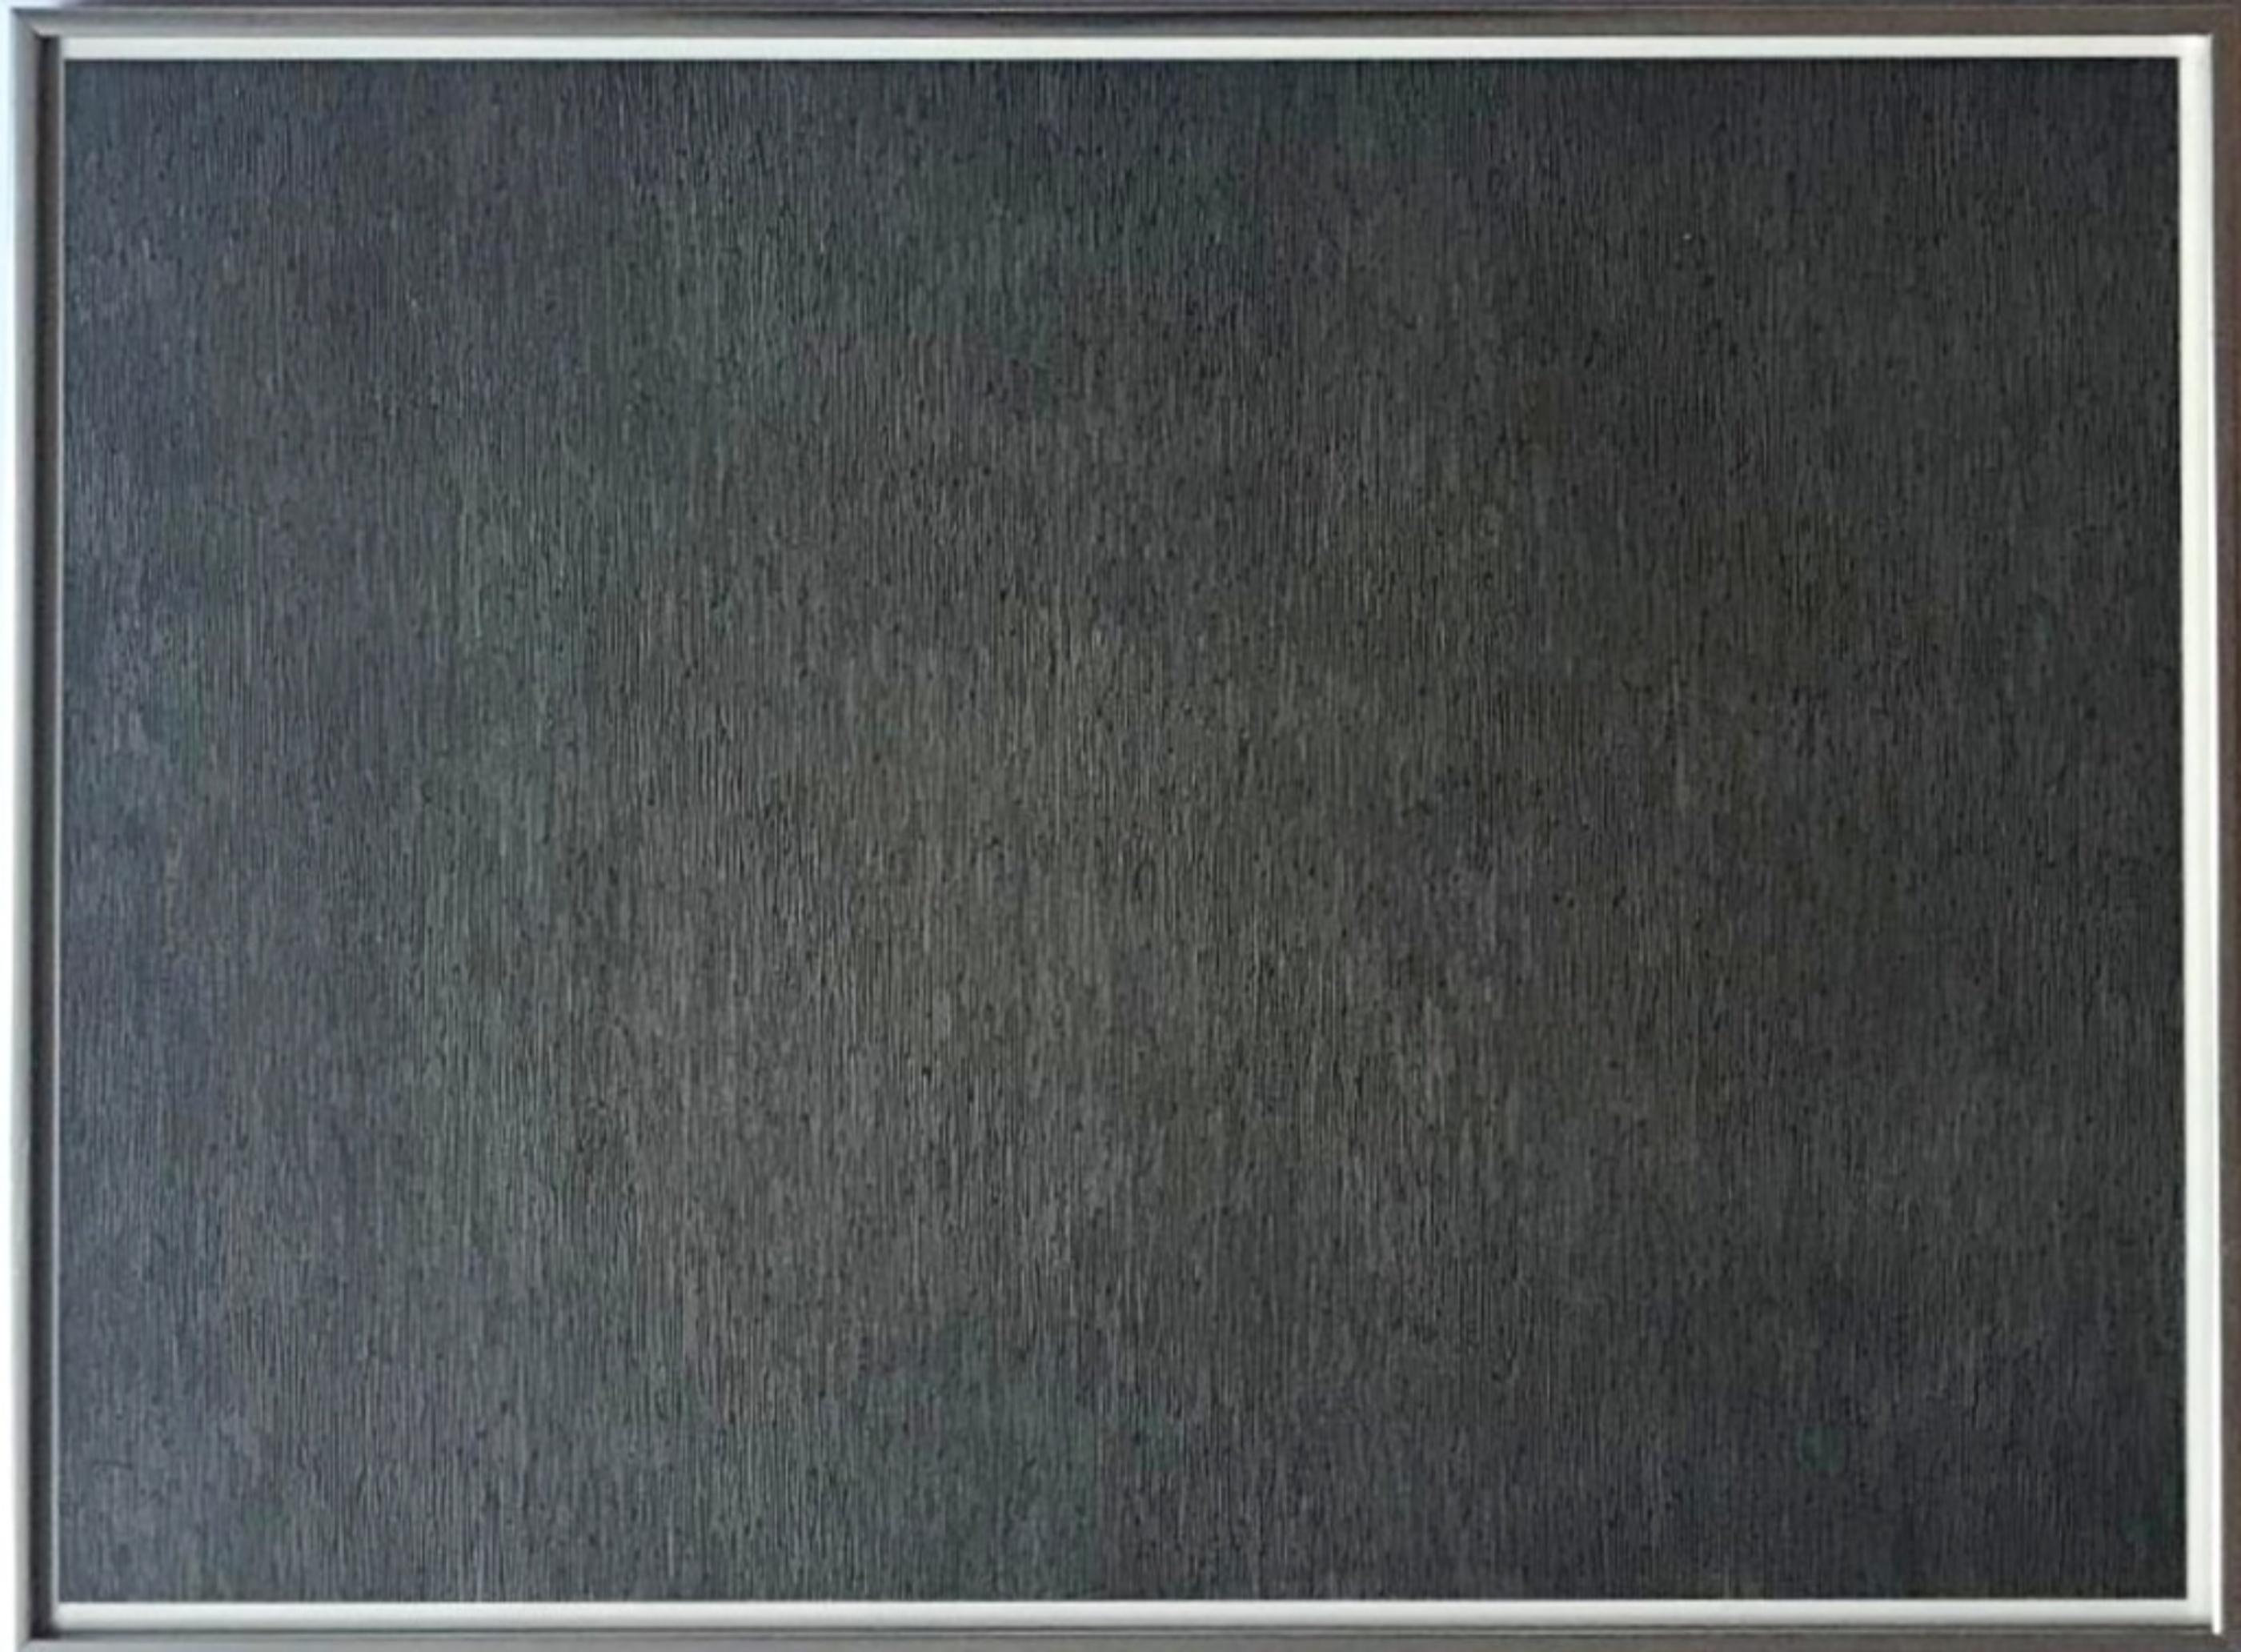 Sol LeWitt Abstract Print - Black with White Lines, Vertical, Not Touching (Krakow 1970.07; 3. Kornfeld)